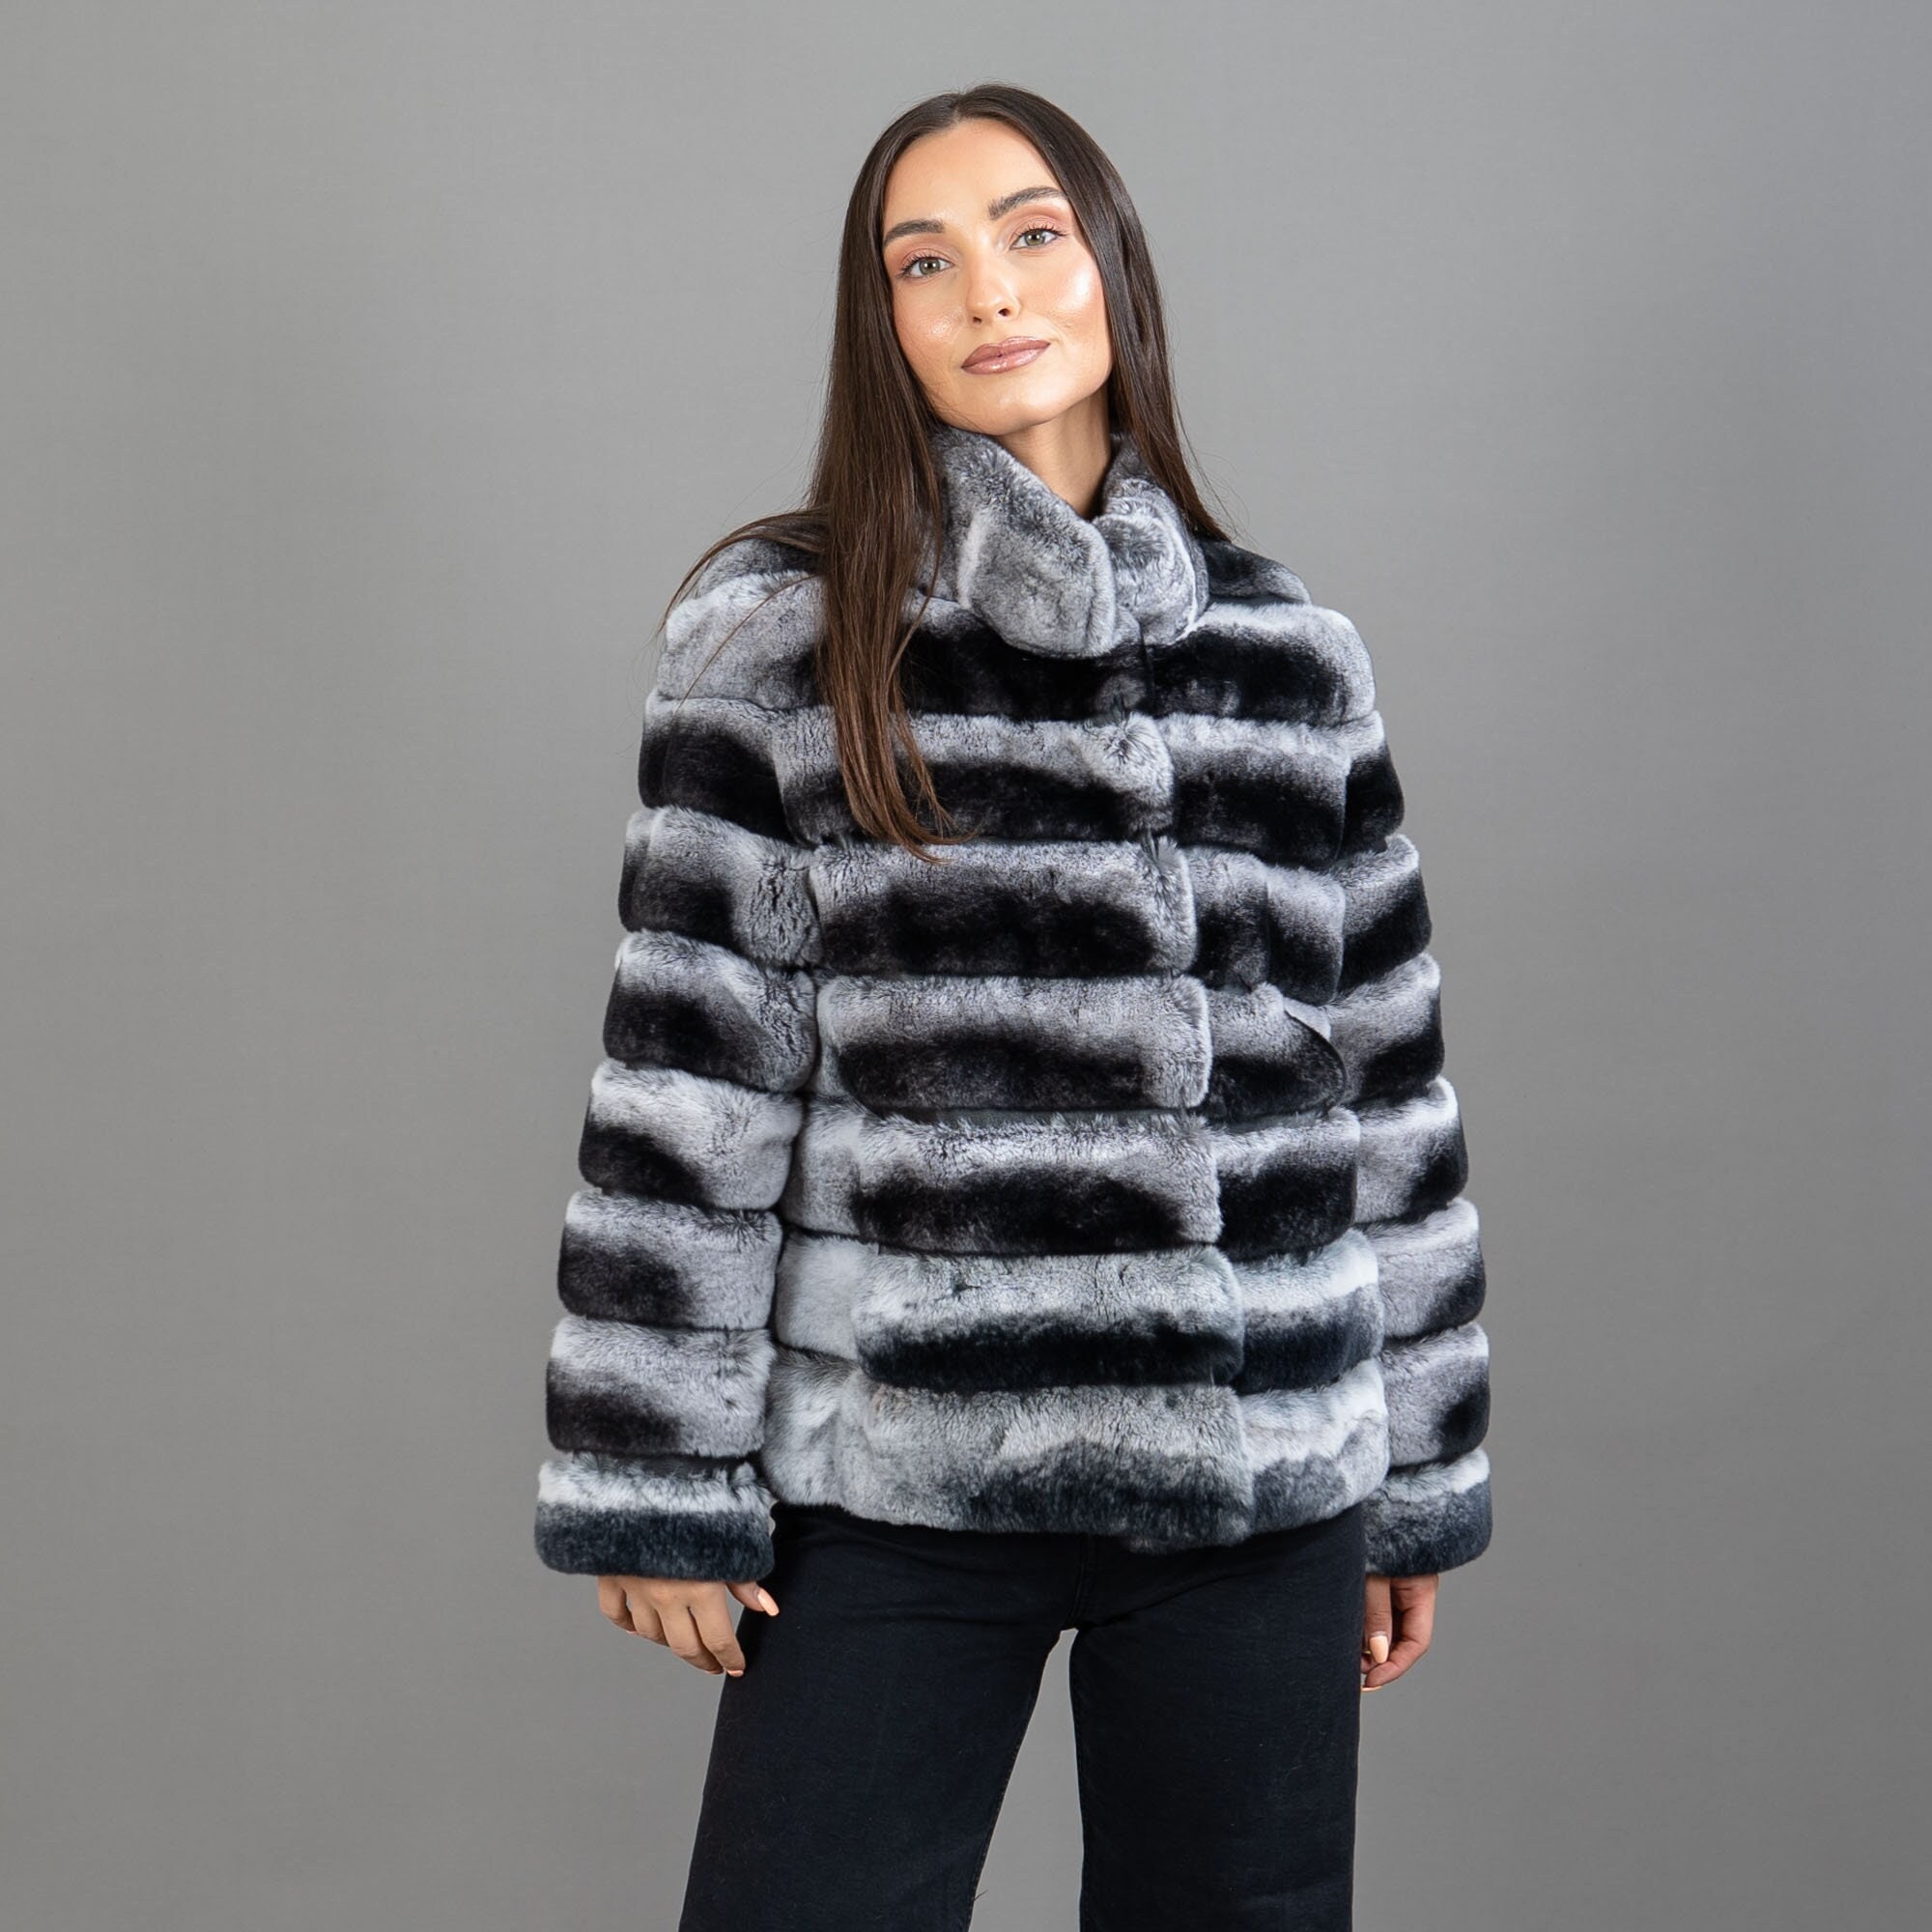 Fur Coat Women Trendy Premium Quality Rex Rabbit Fur Jacket Autumn Winter  Warm Fashion Outwear